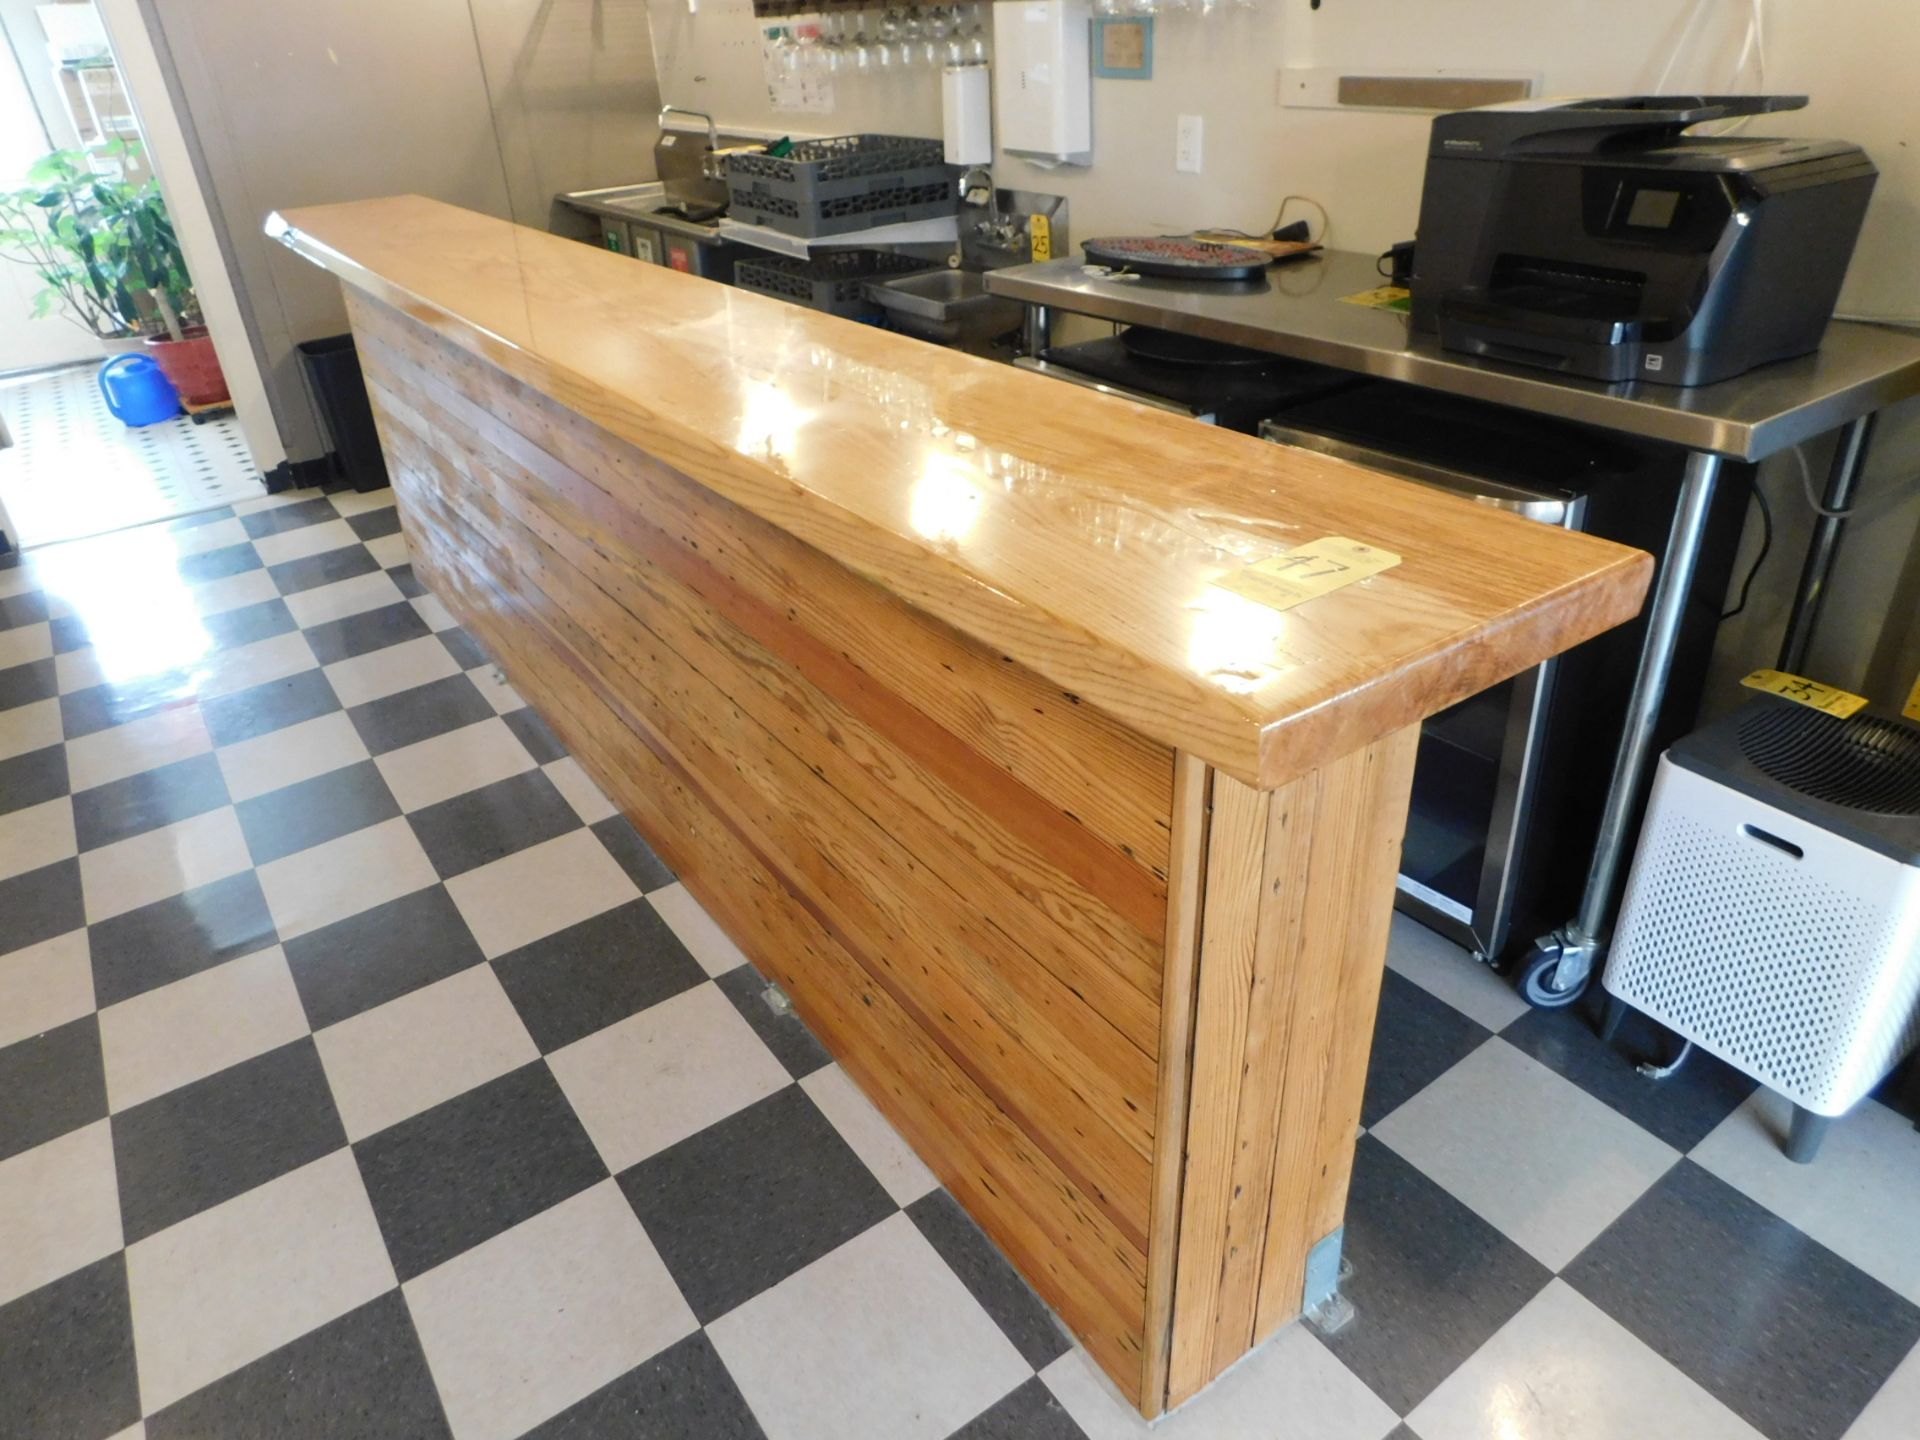 12' Wood Finish Bar, Mill Cut Hardwood Slab, Epoxy Counter Top, Wood Plank Sides, 12' L x 17" W x - Image 2 of 7